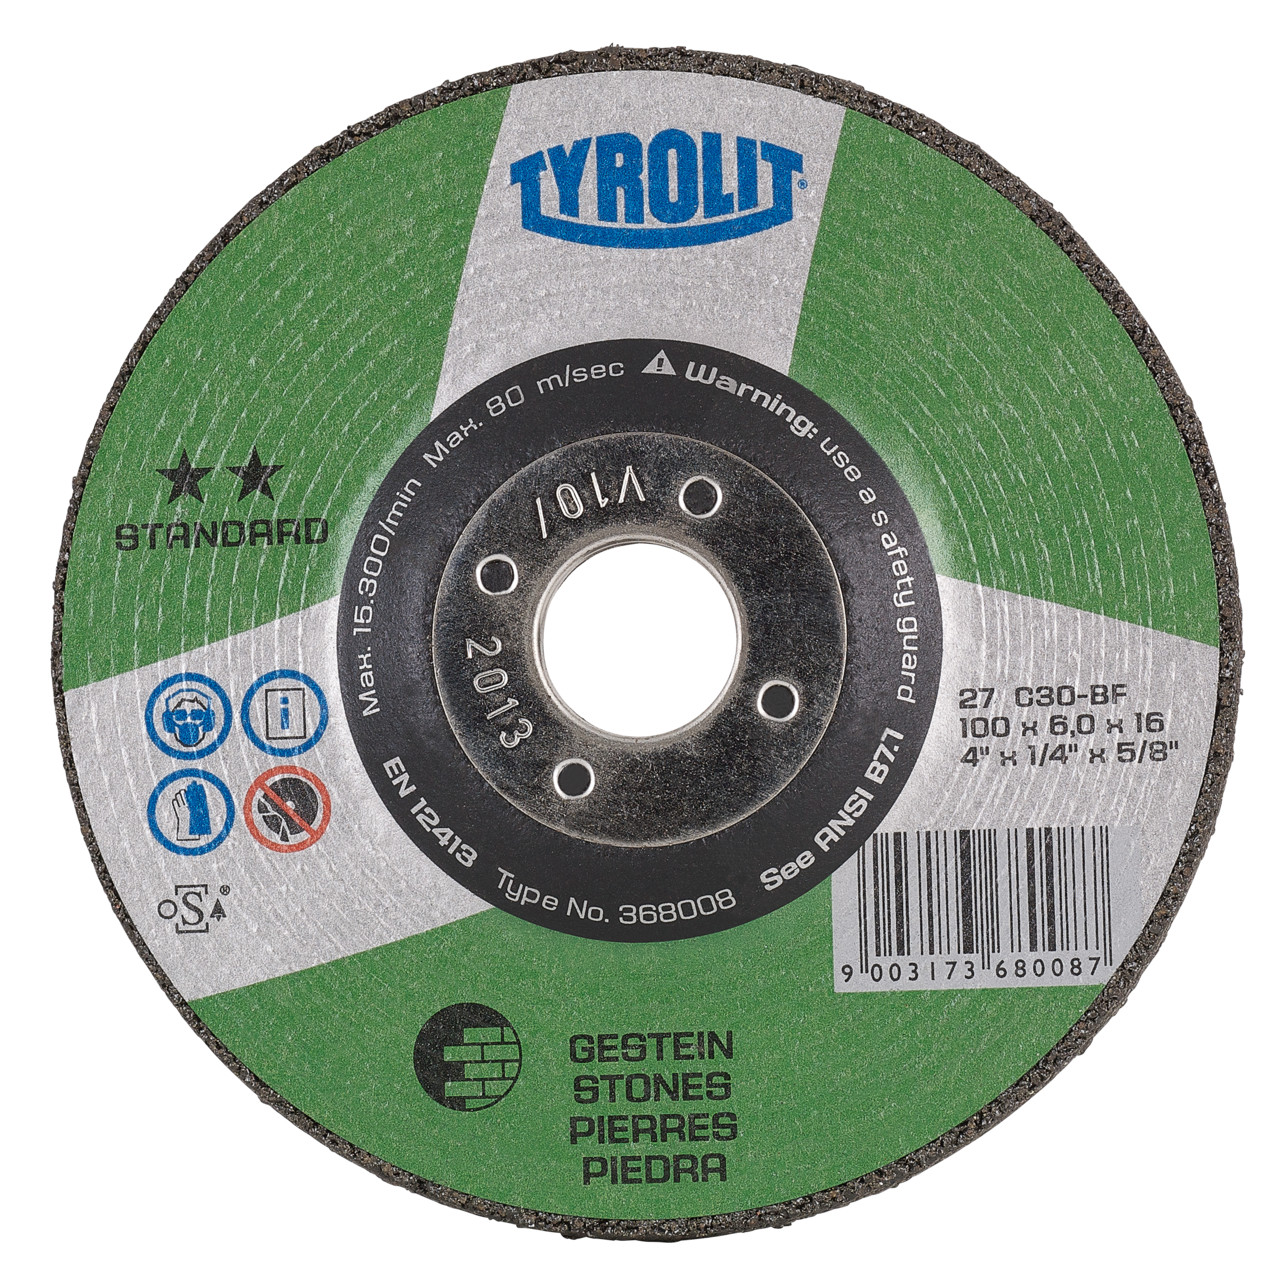 TYROLIT grinding wheel DxUxH 230x6x22.23 For stone, shape: 27 - offset version, Art. 367557